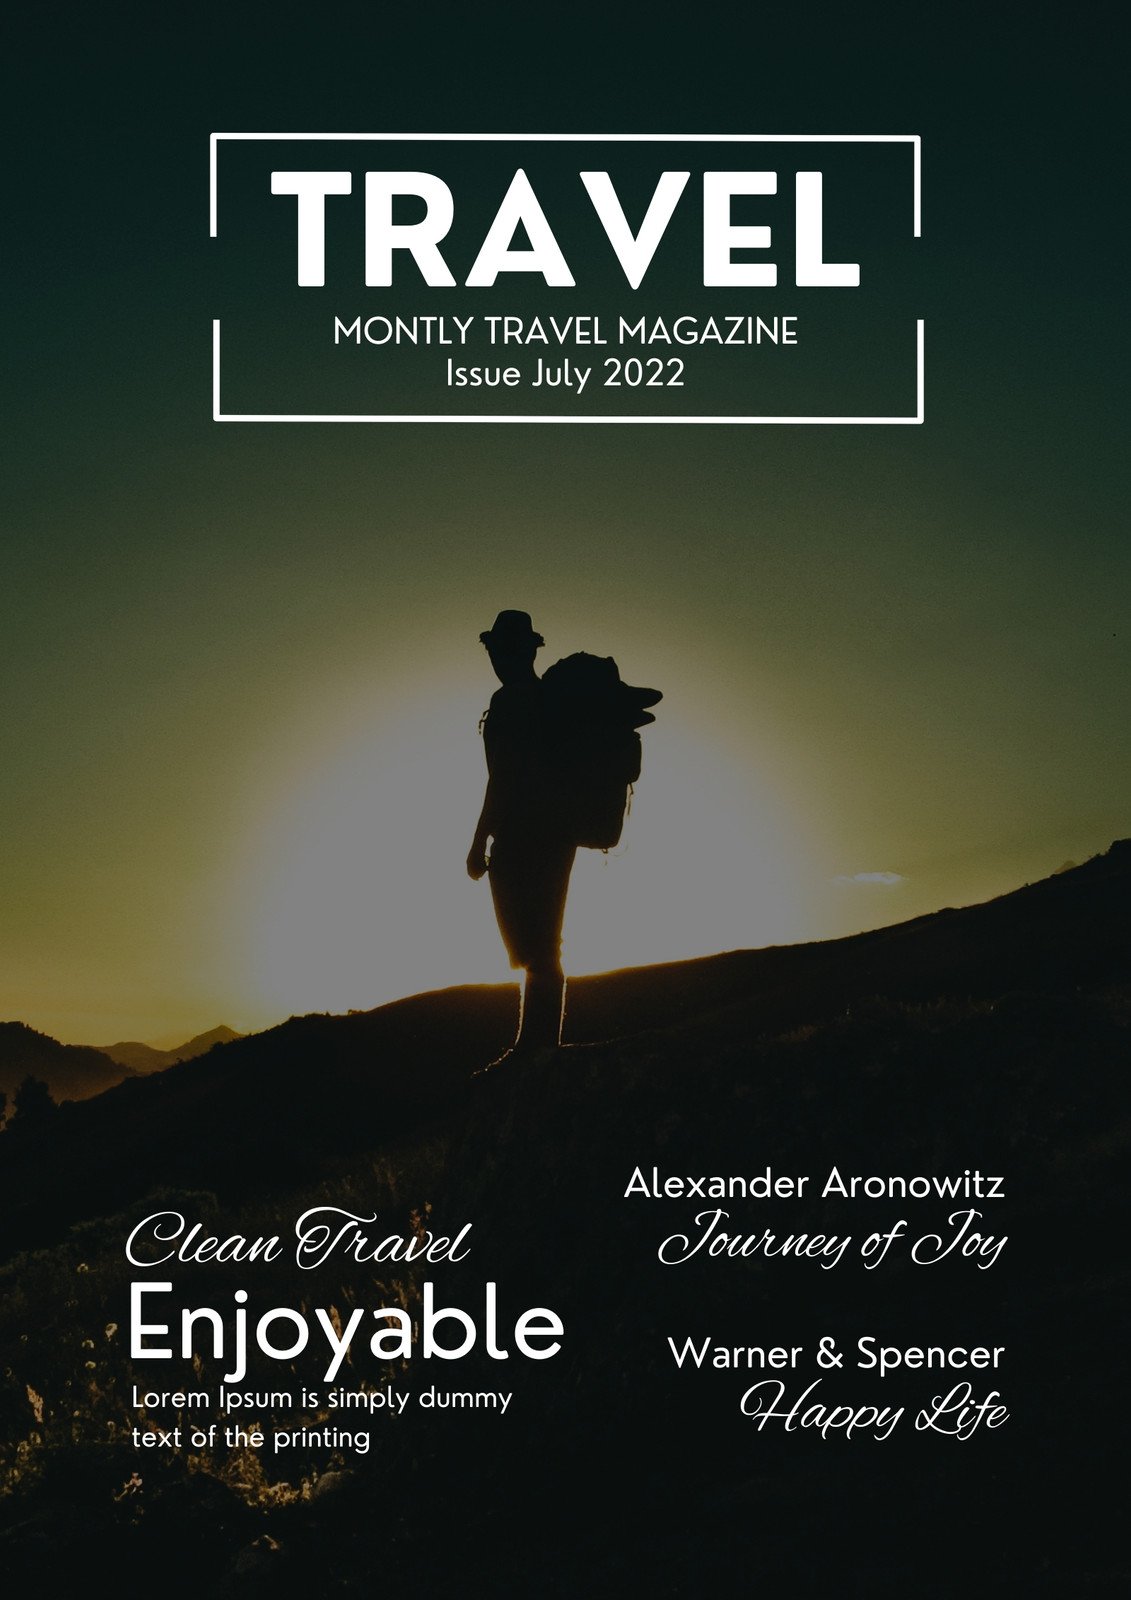 Free printable, customizable travel magazine cover templates